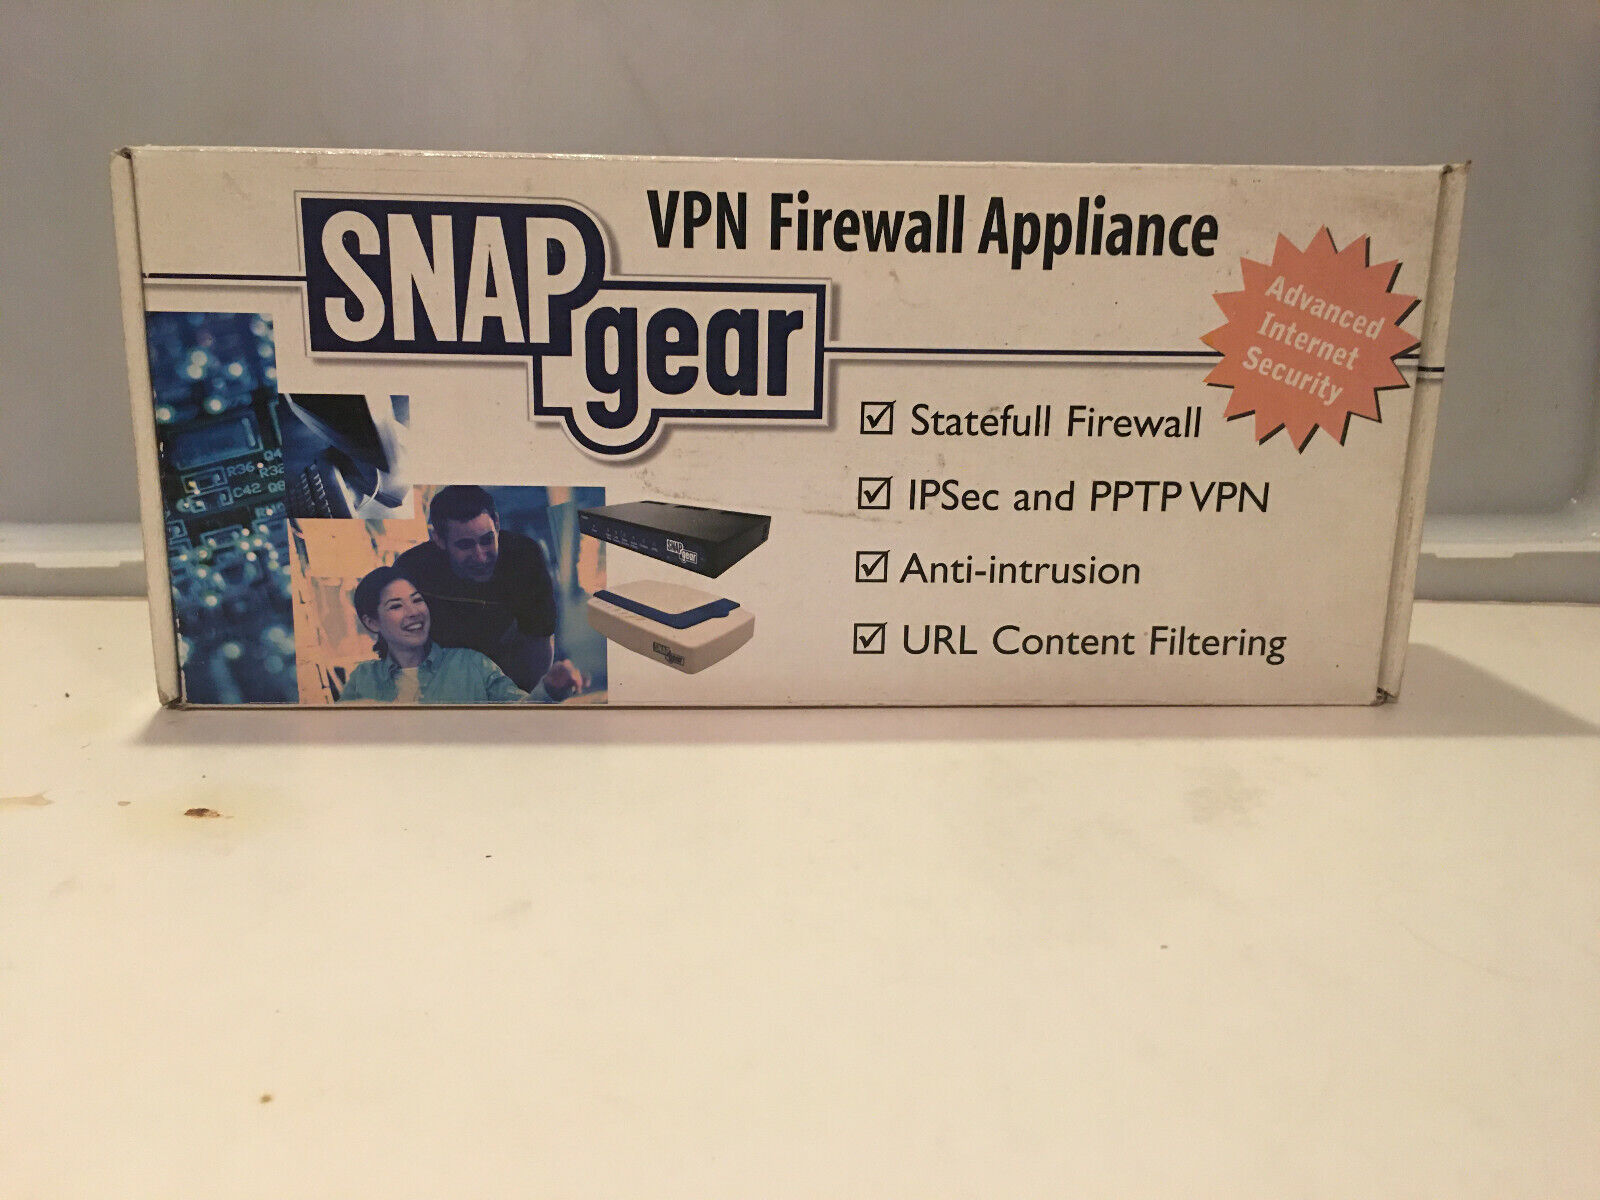 Snap Gear Internet Security VPN Firewall 800027 (US)L2